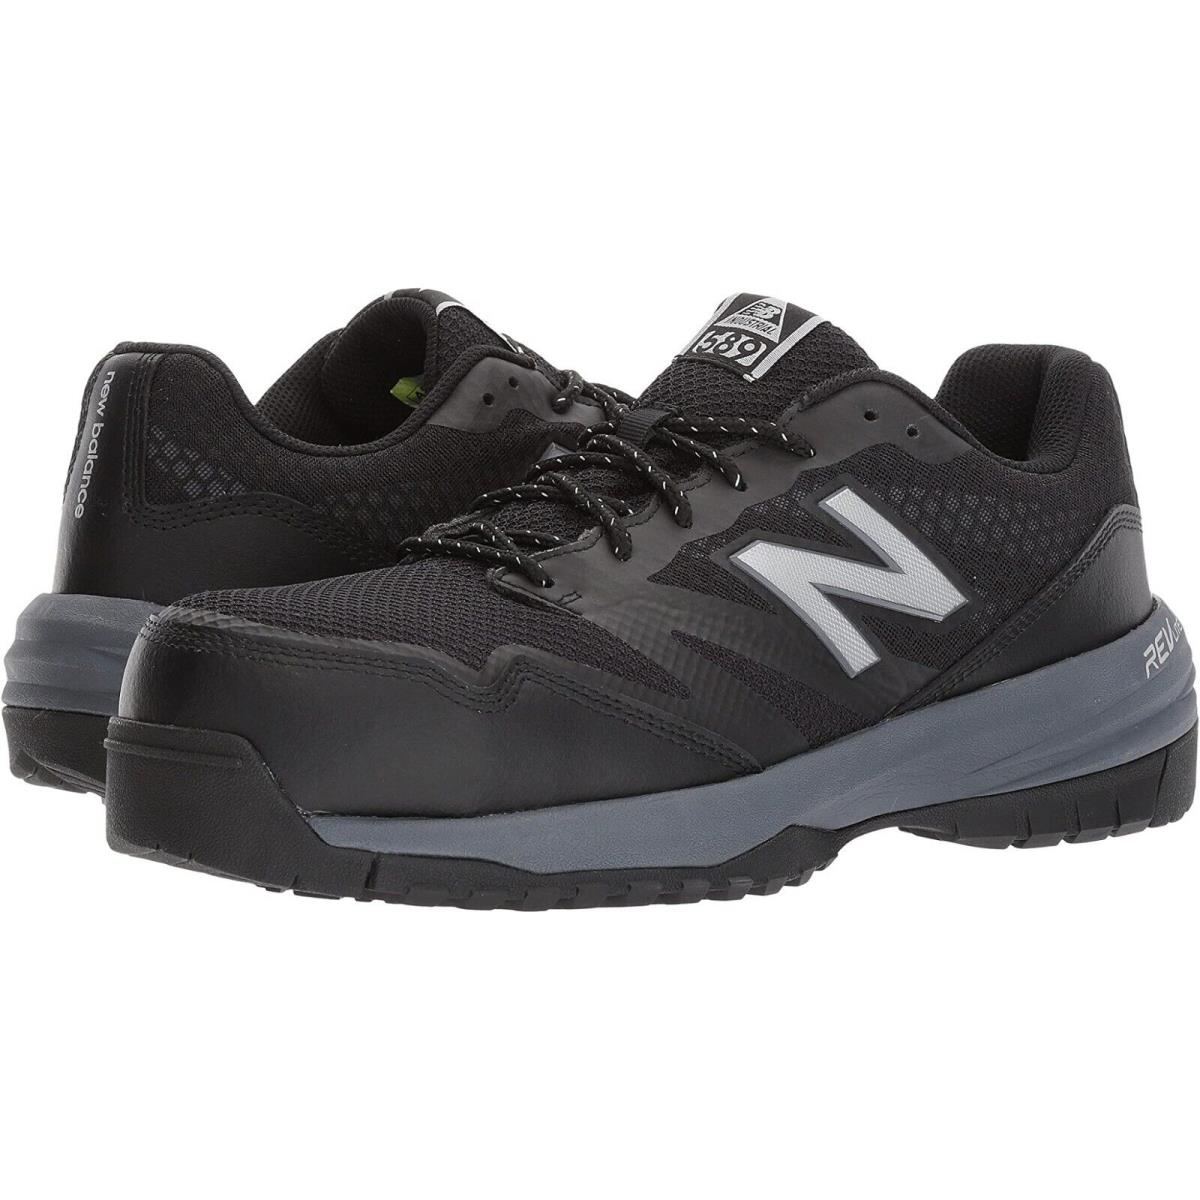 New Balance 589v1 N7611 Men`s Training Shoes Black/grey Size 11.5 D